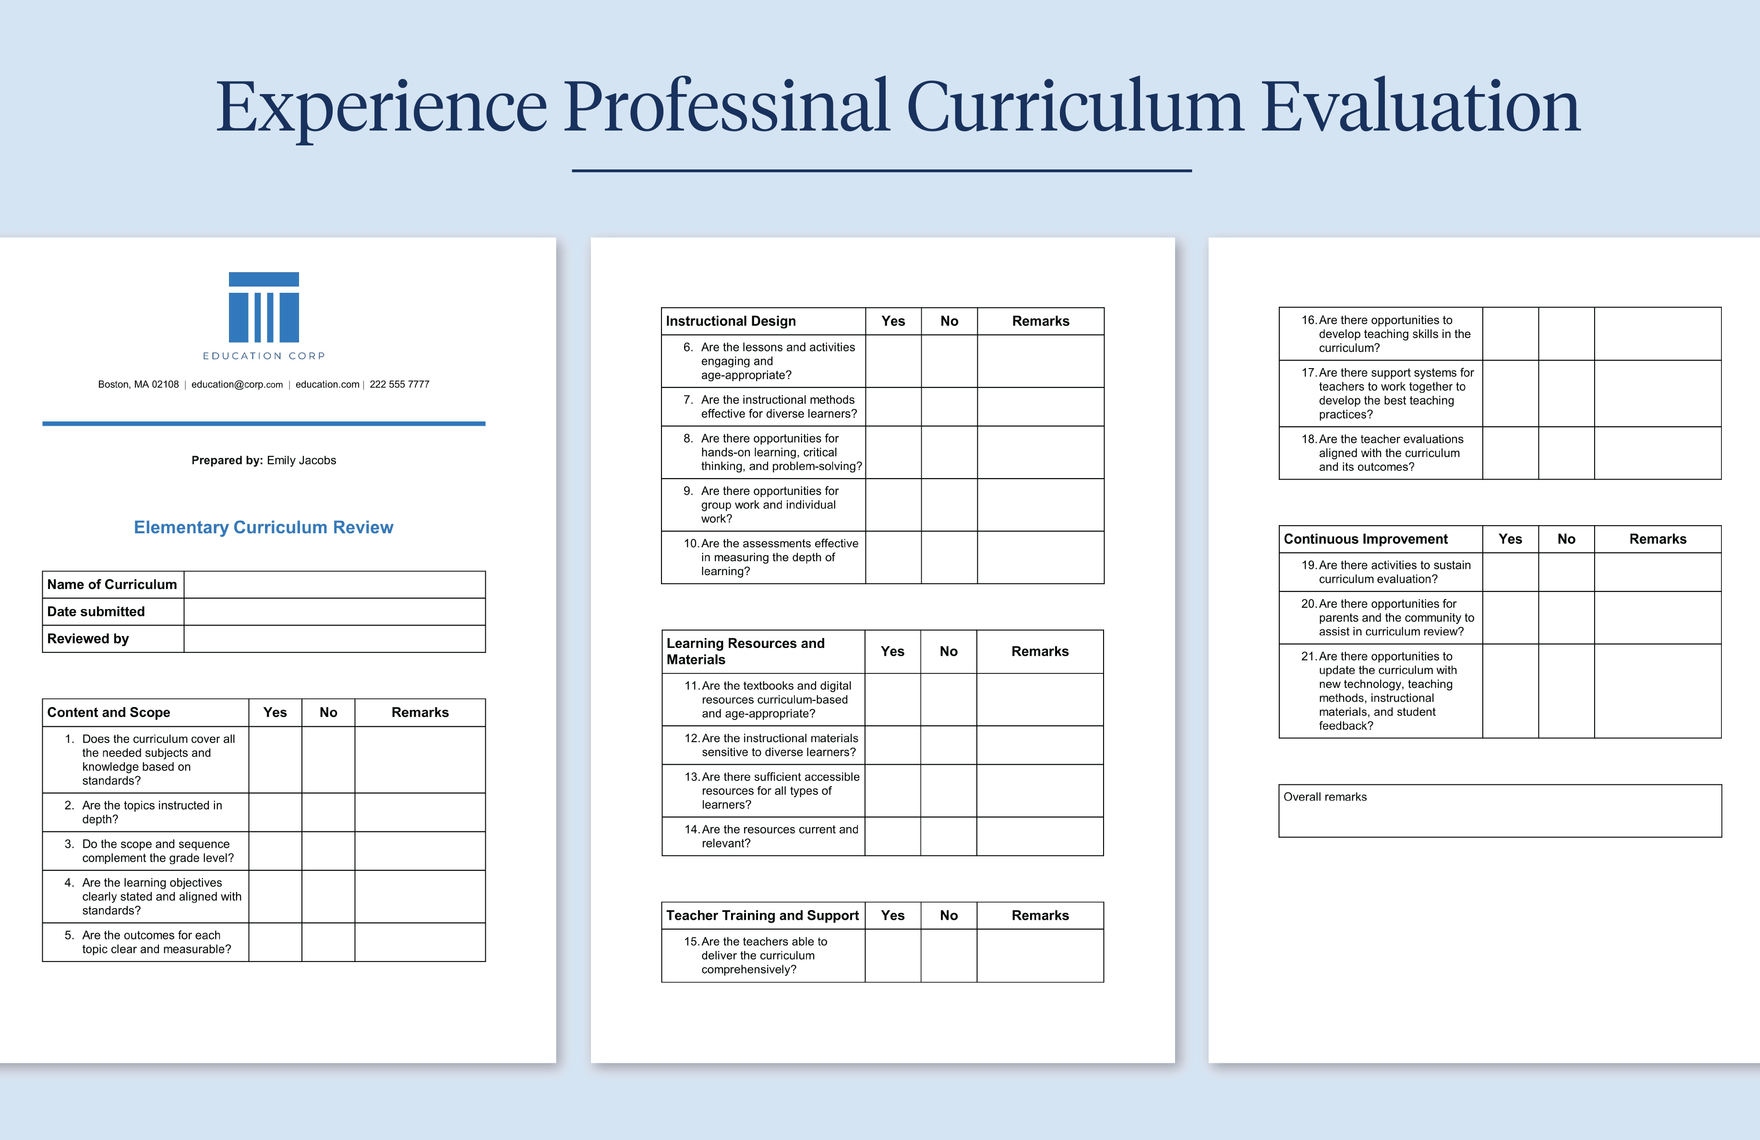 Elementary Curriculum Review Checklist